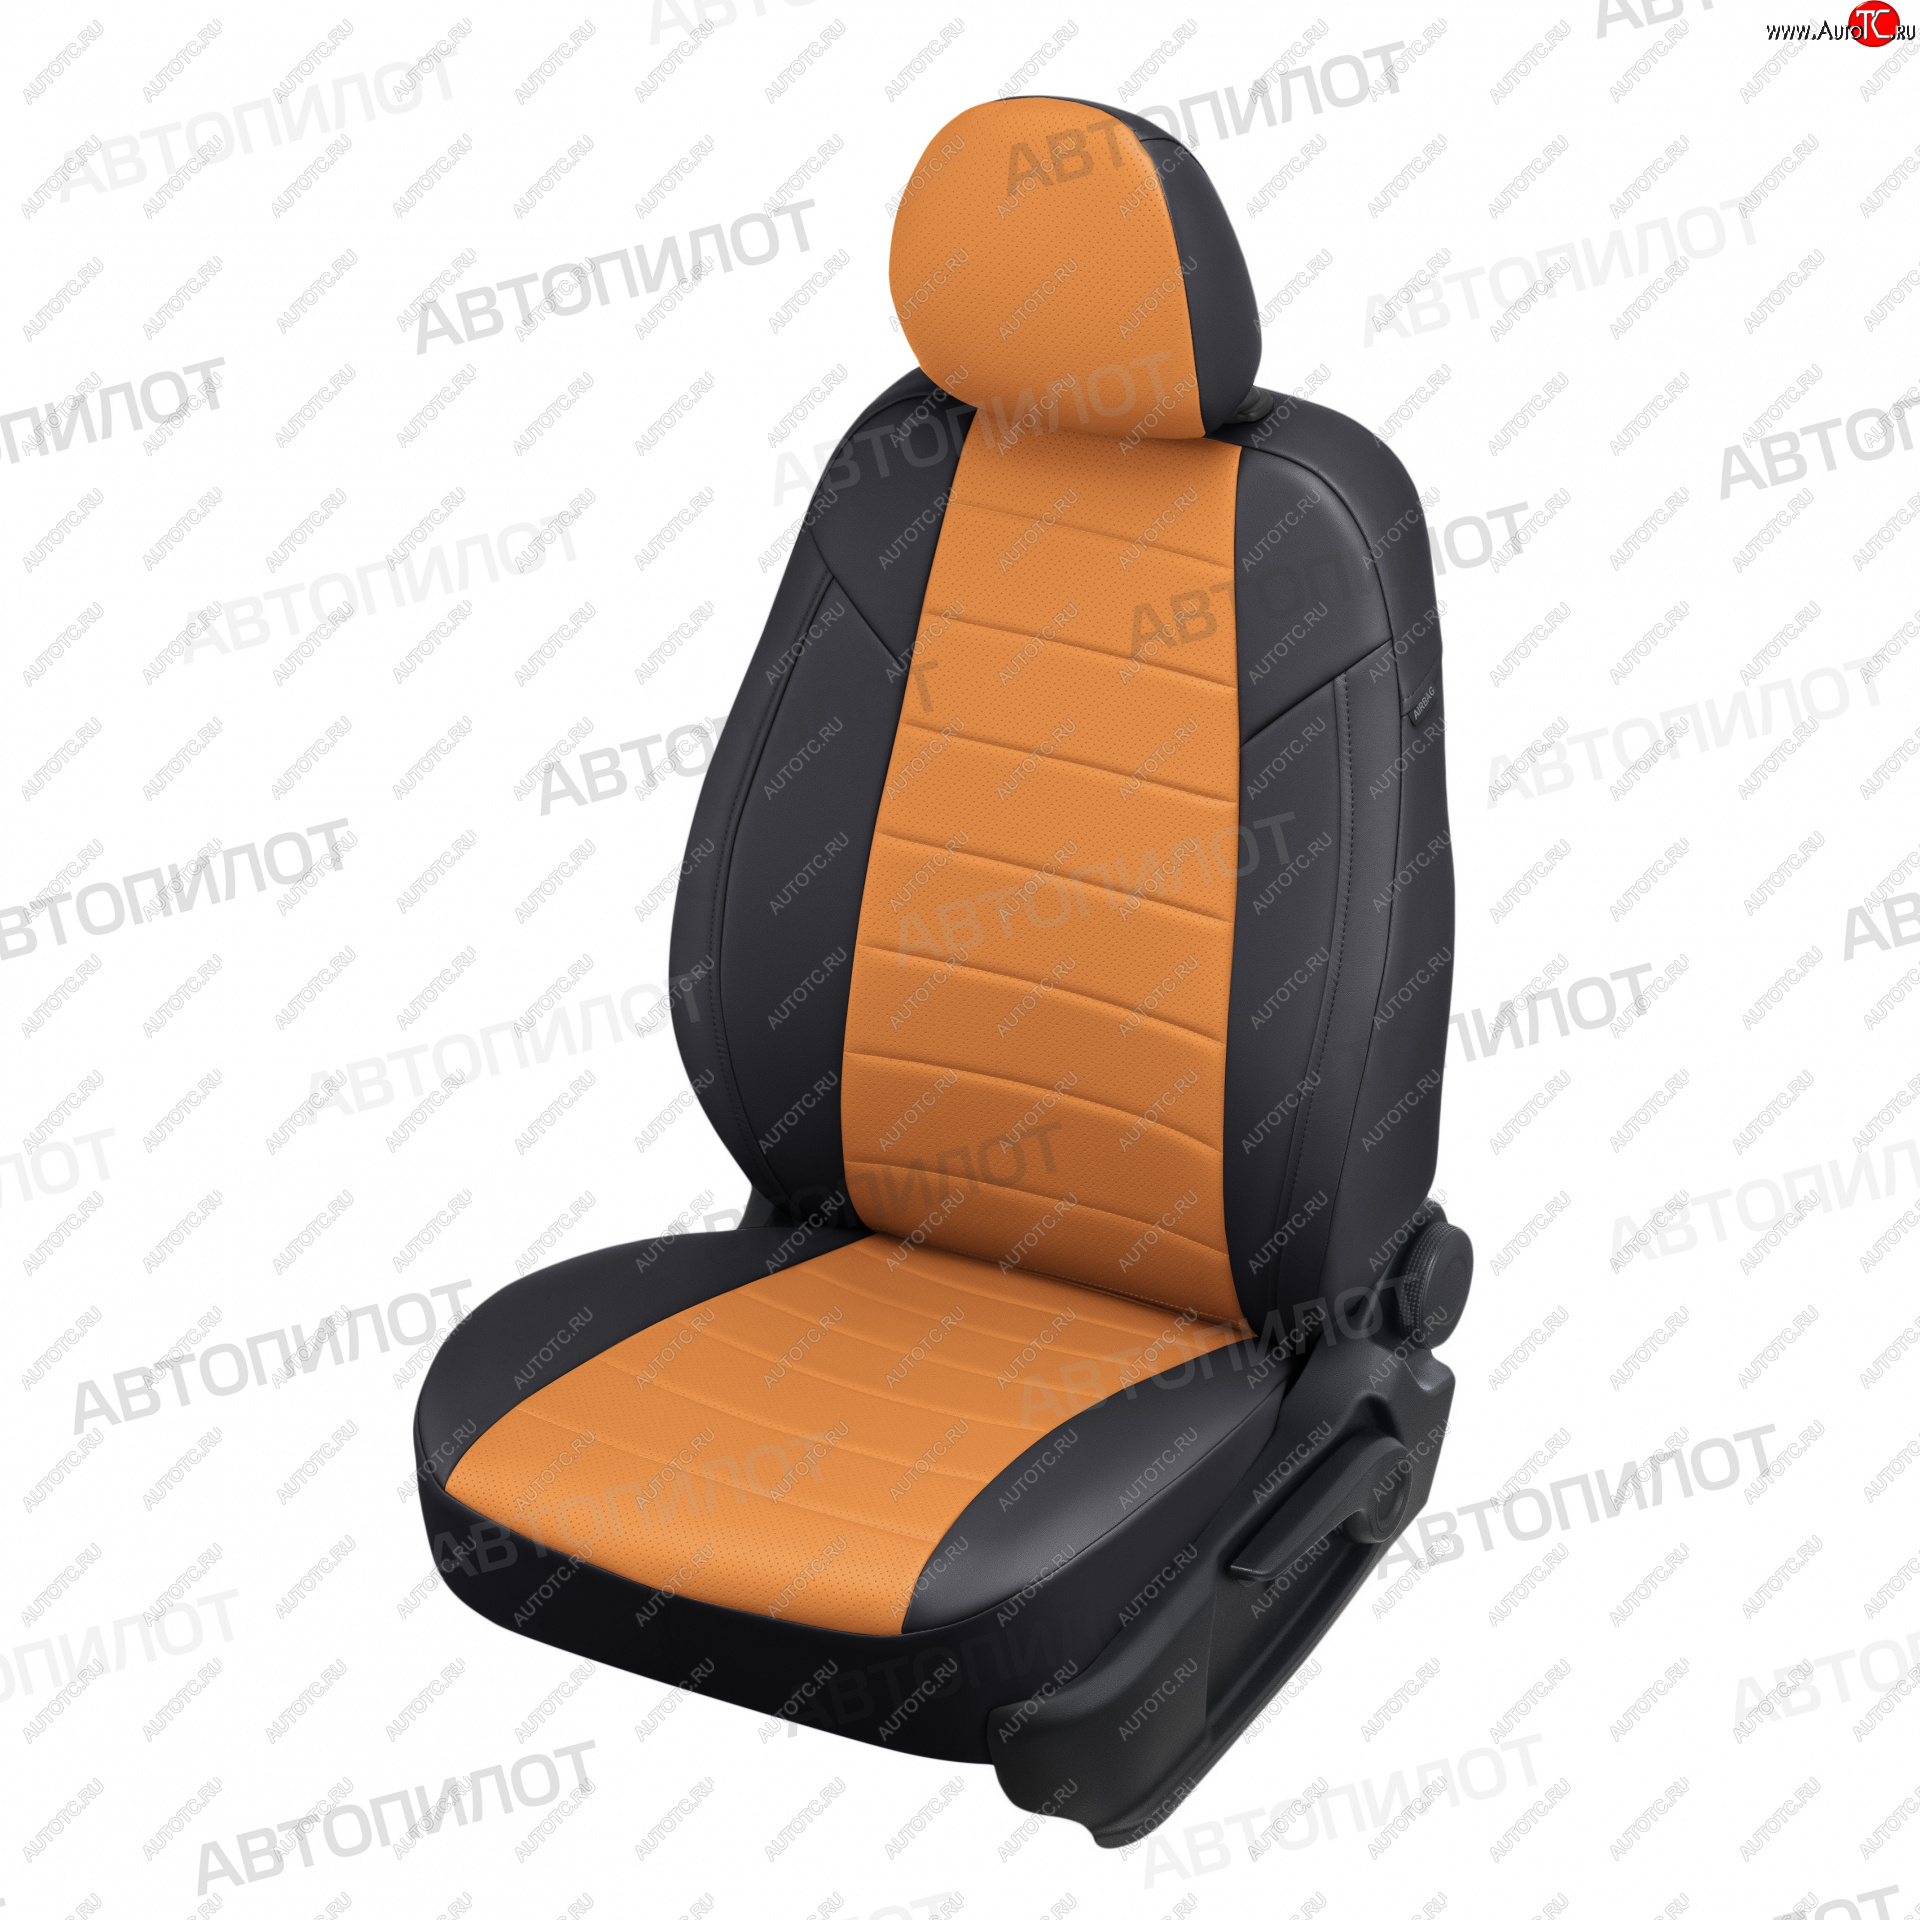 13 449 р. Чехлы сидений (экокожа, Grand 50/50) Автопилот  KIA Sportage  1 JA (1993-2006) (черный/оранж)